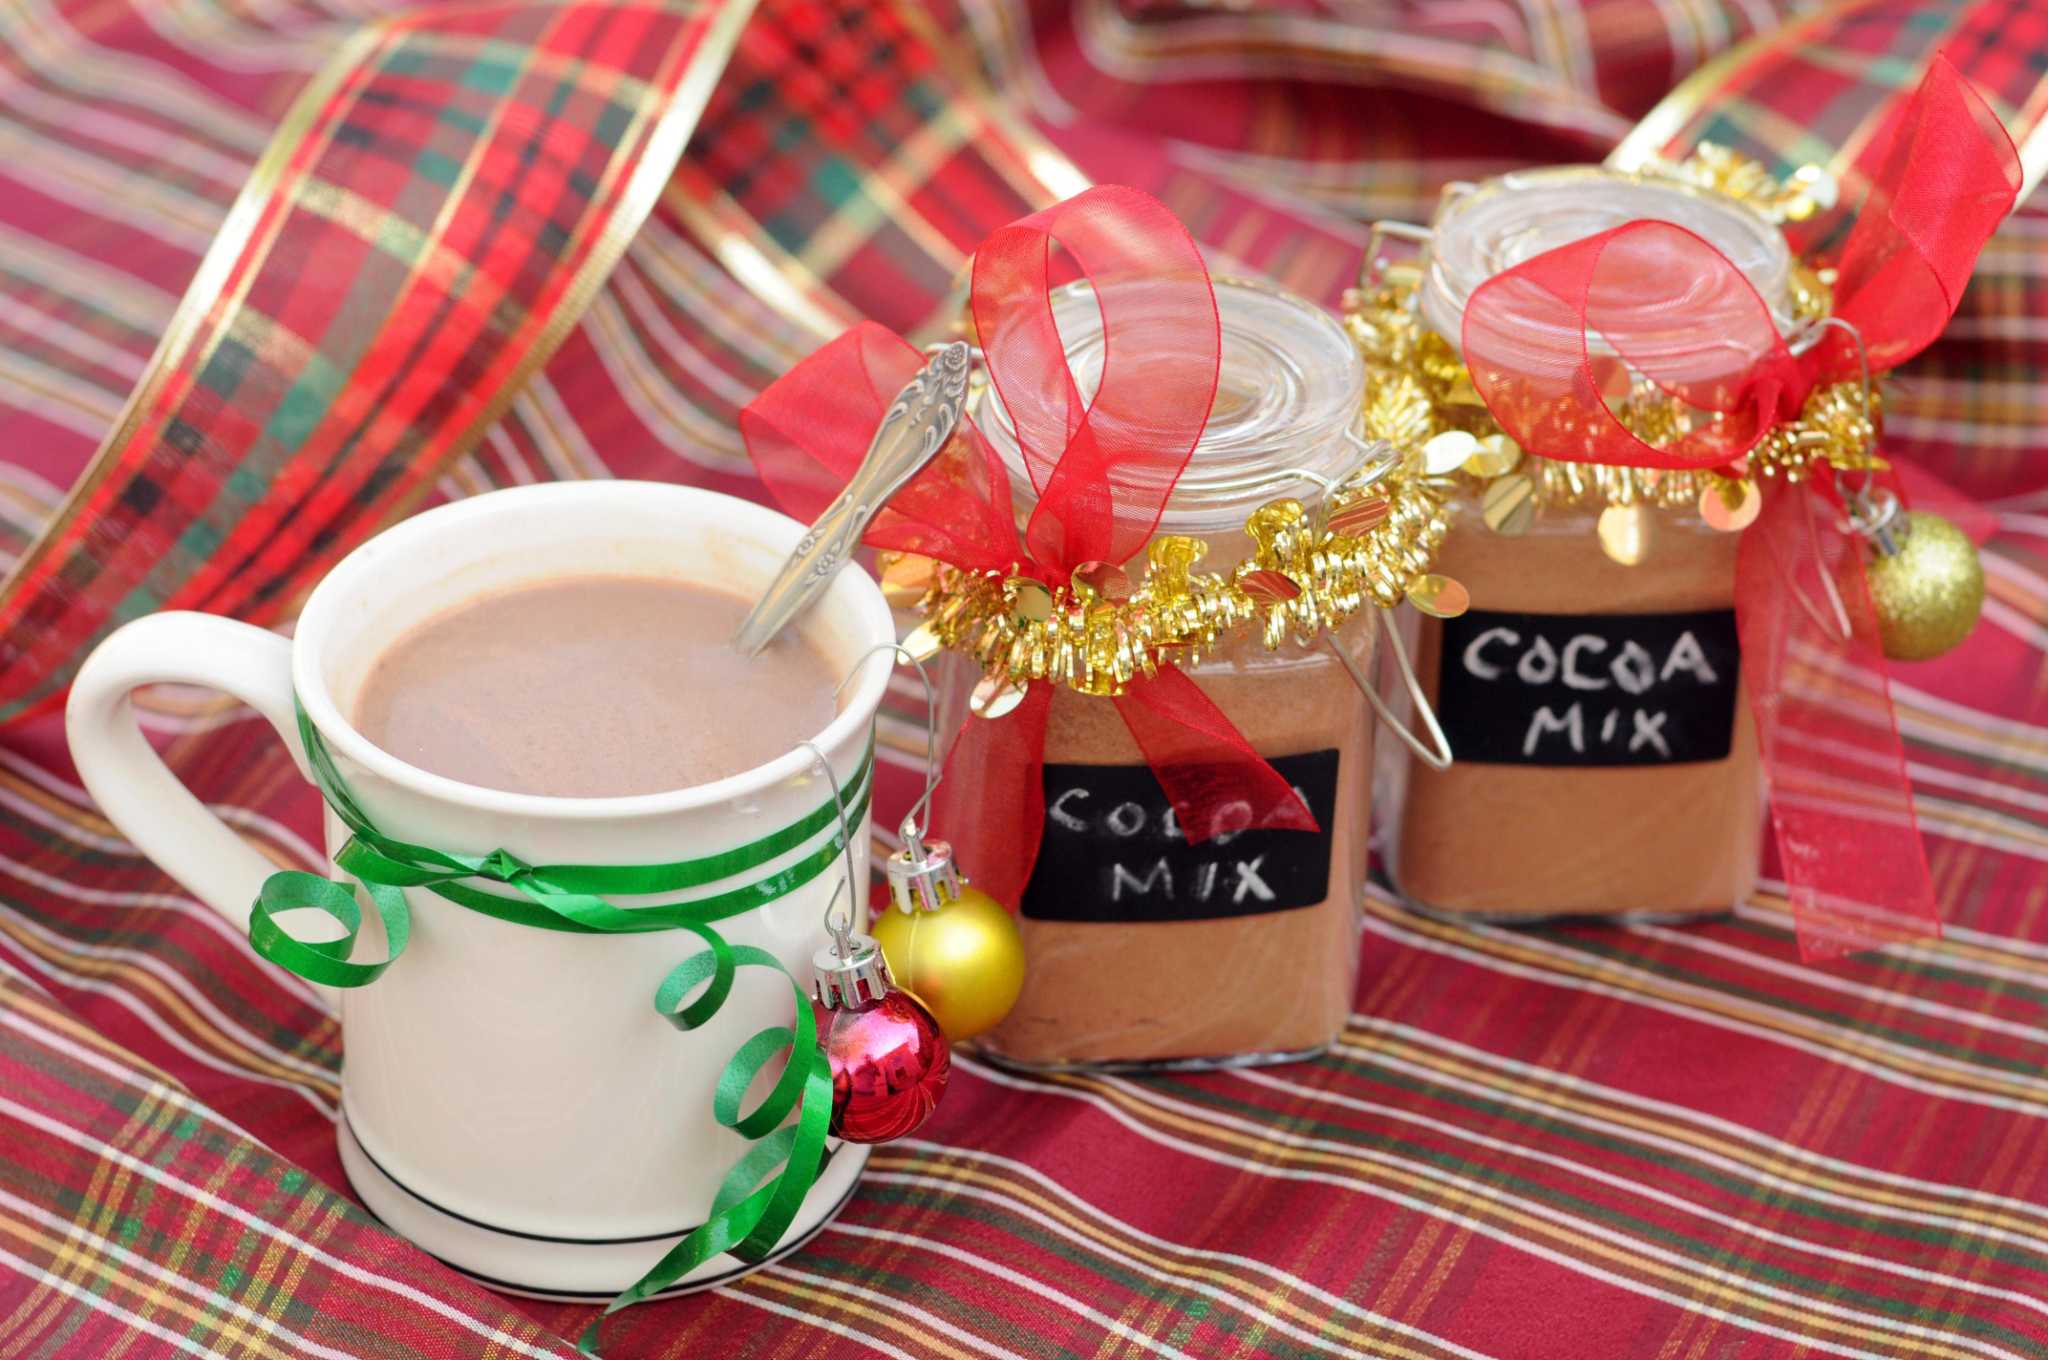 Diy Hot Cocoa Mix Gift / Make Hot Chocolate Kit As A Gift